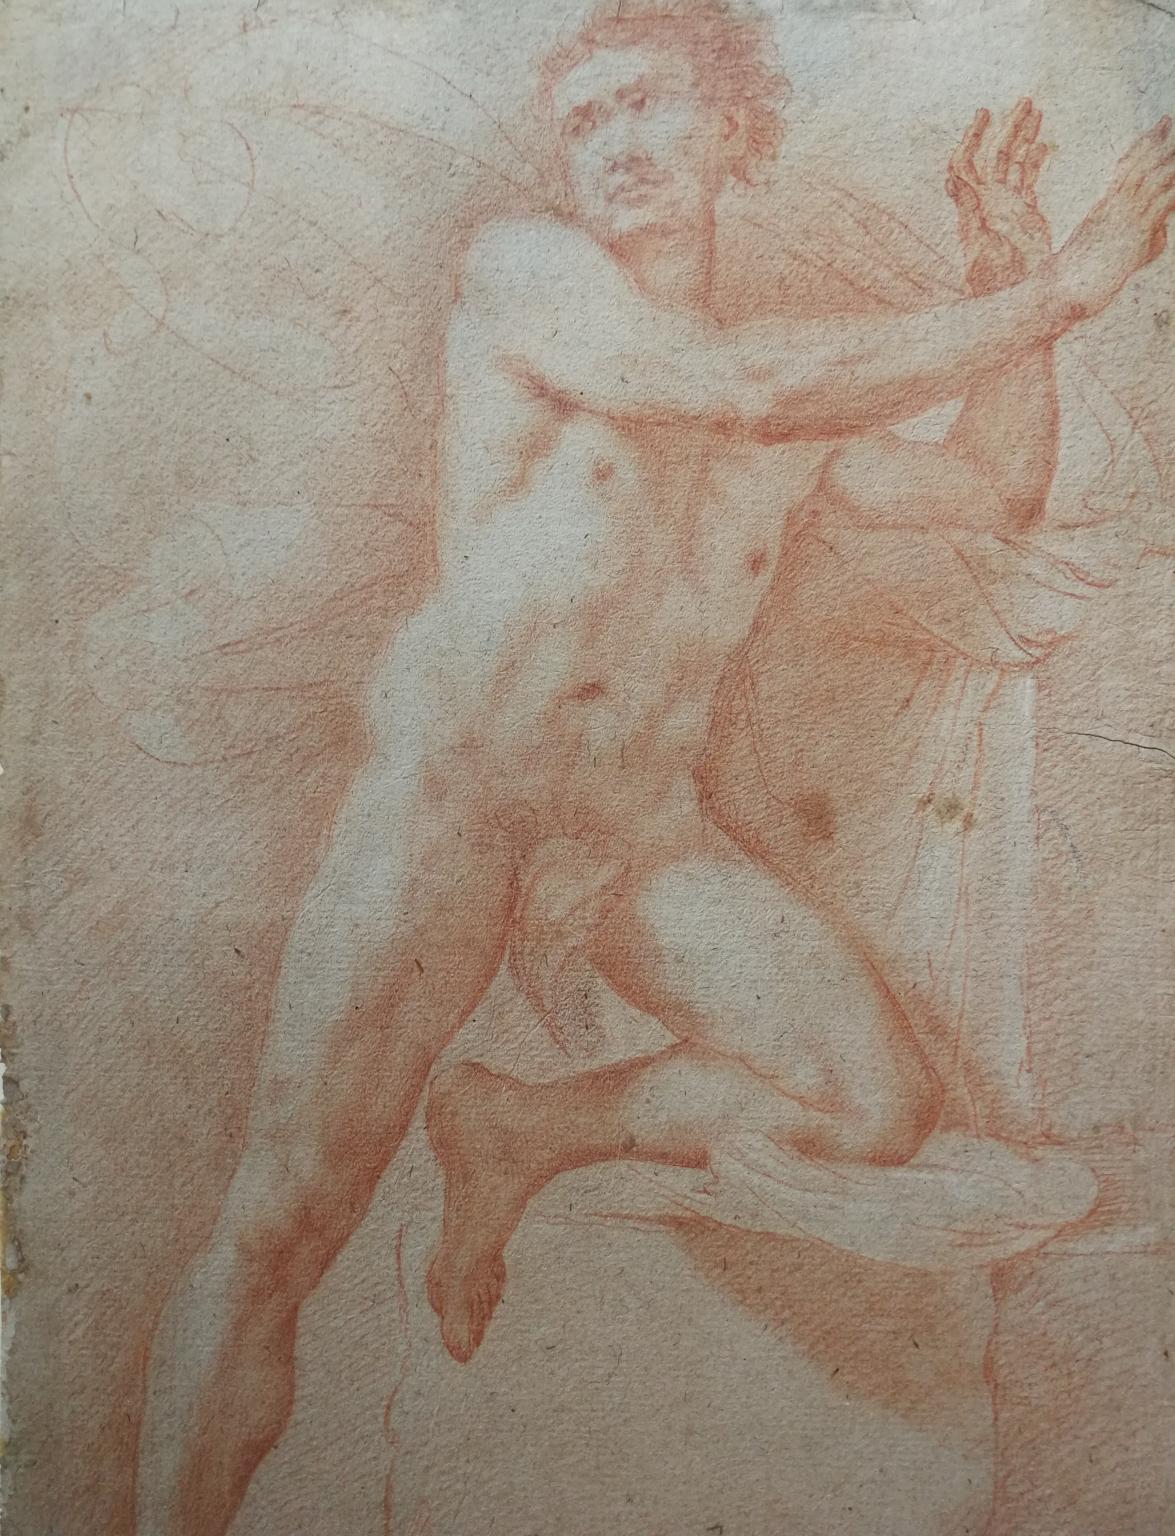 Francesco Furini Sanguine Drawing before 1642 